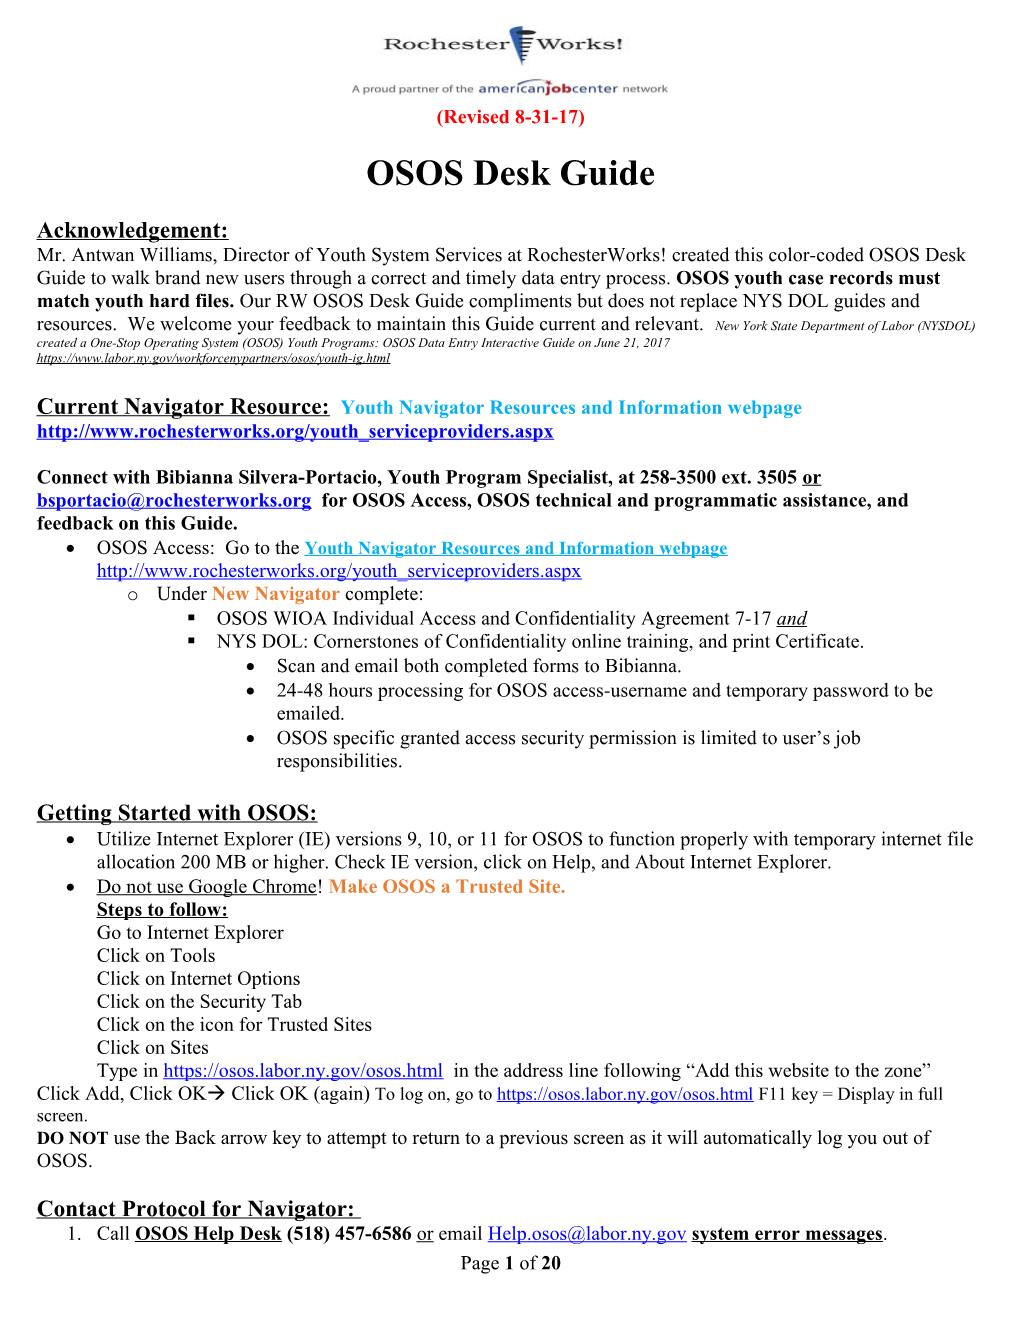 OSOS Desk Guide s1